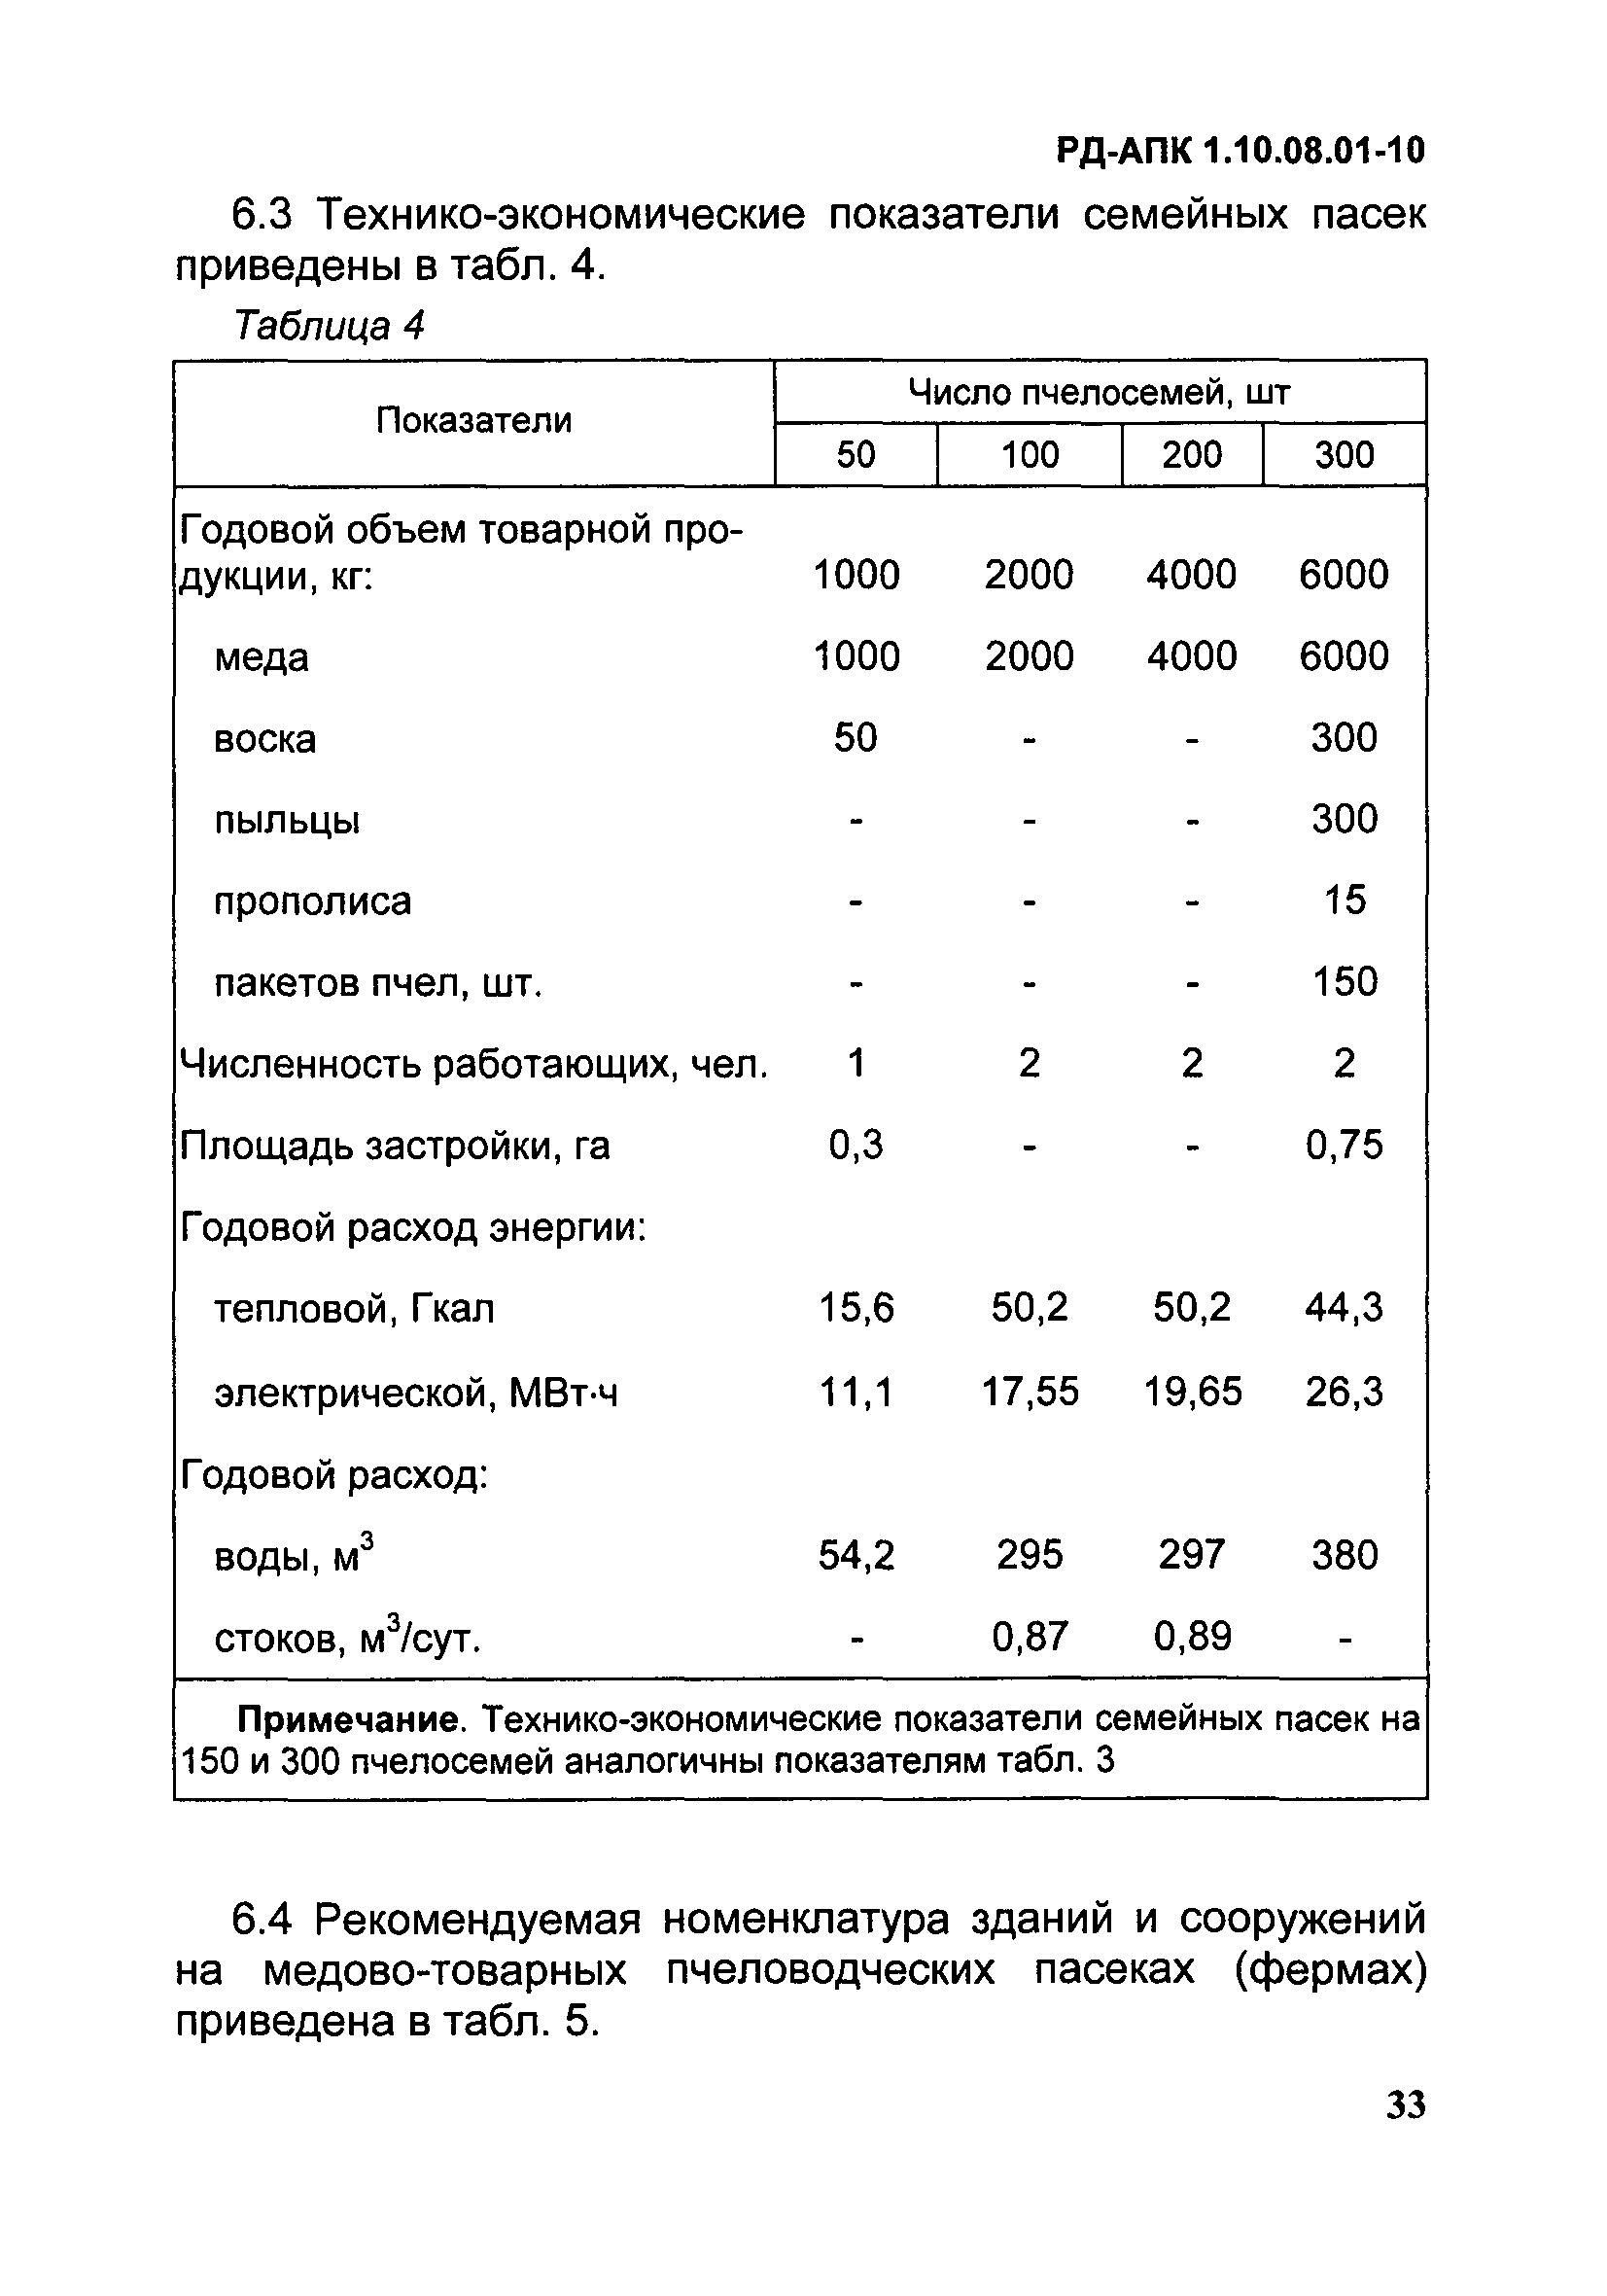 РД-АПК 1.10.08.01-10